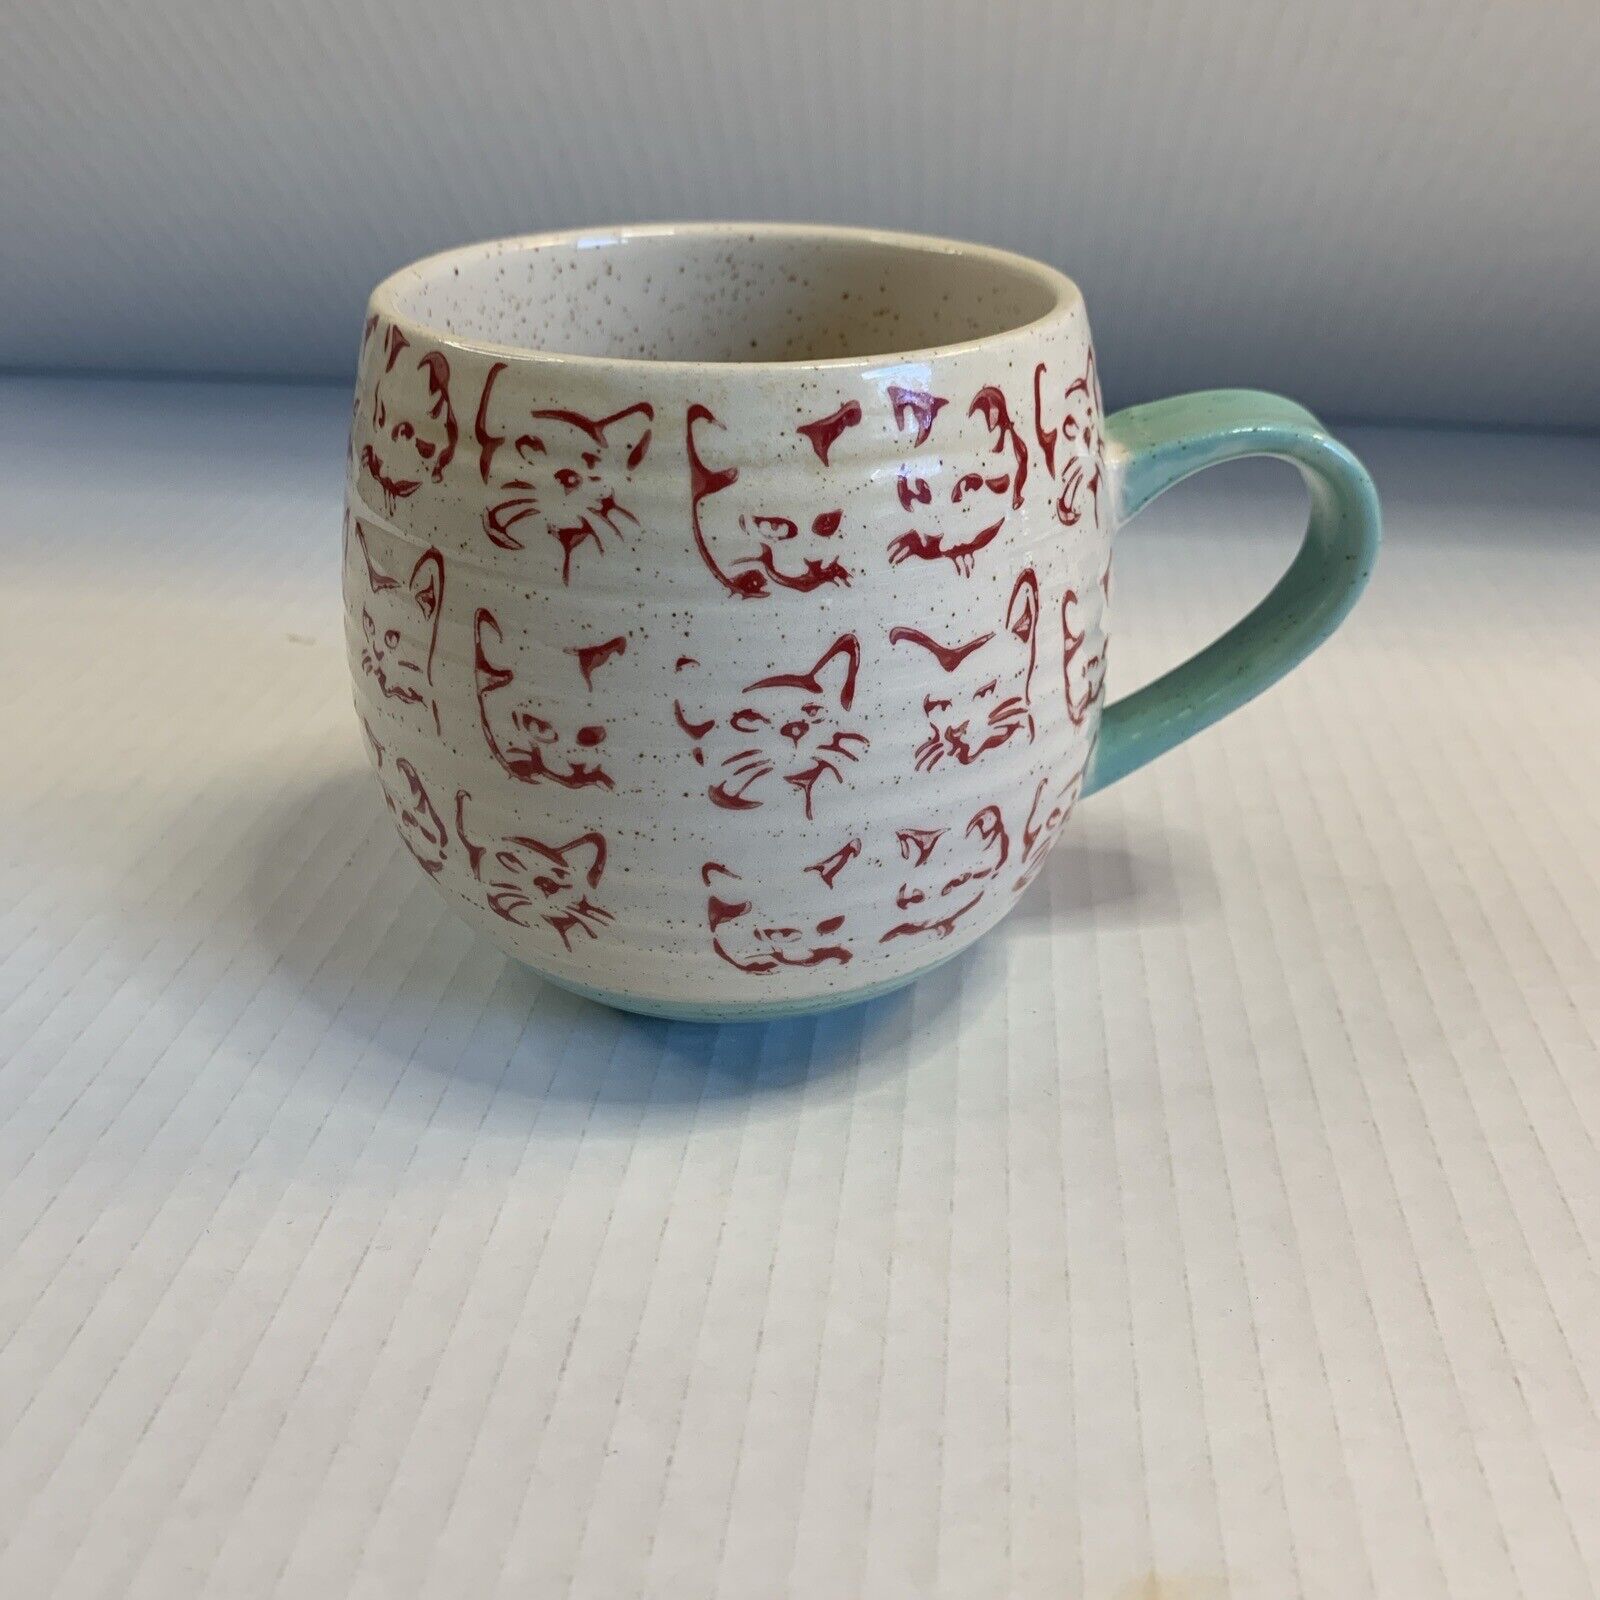 Cat Faces Sketch Mug Aqua Handle Red Speckled Tea Coffee Cup PET Home Essential